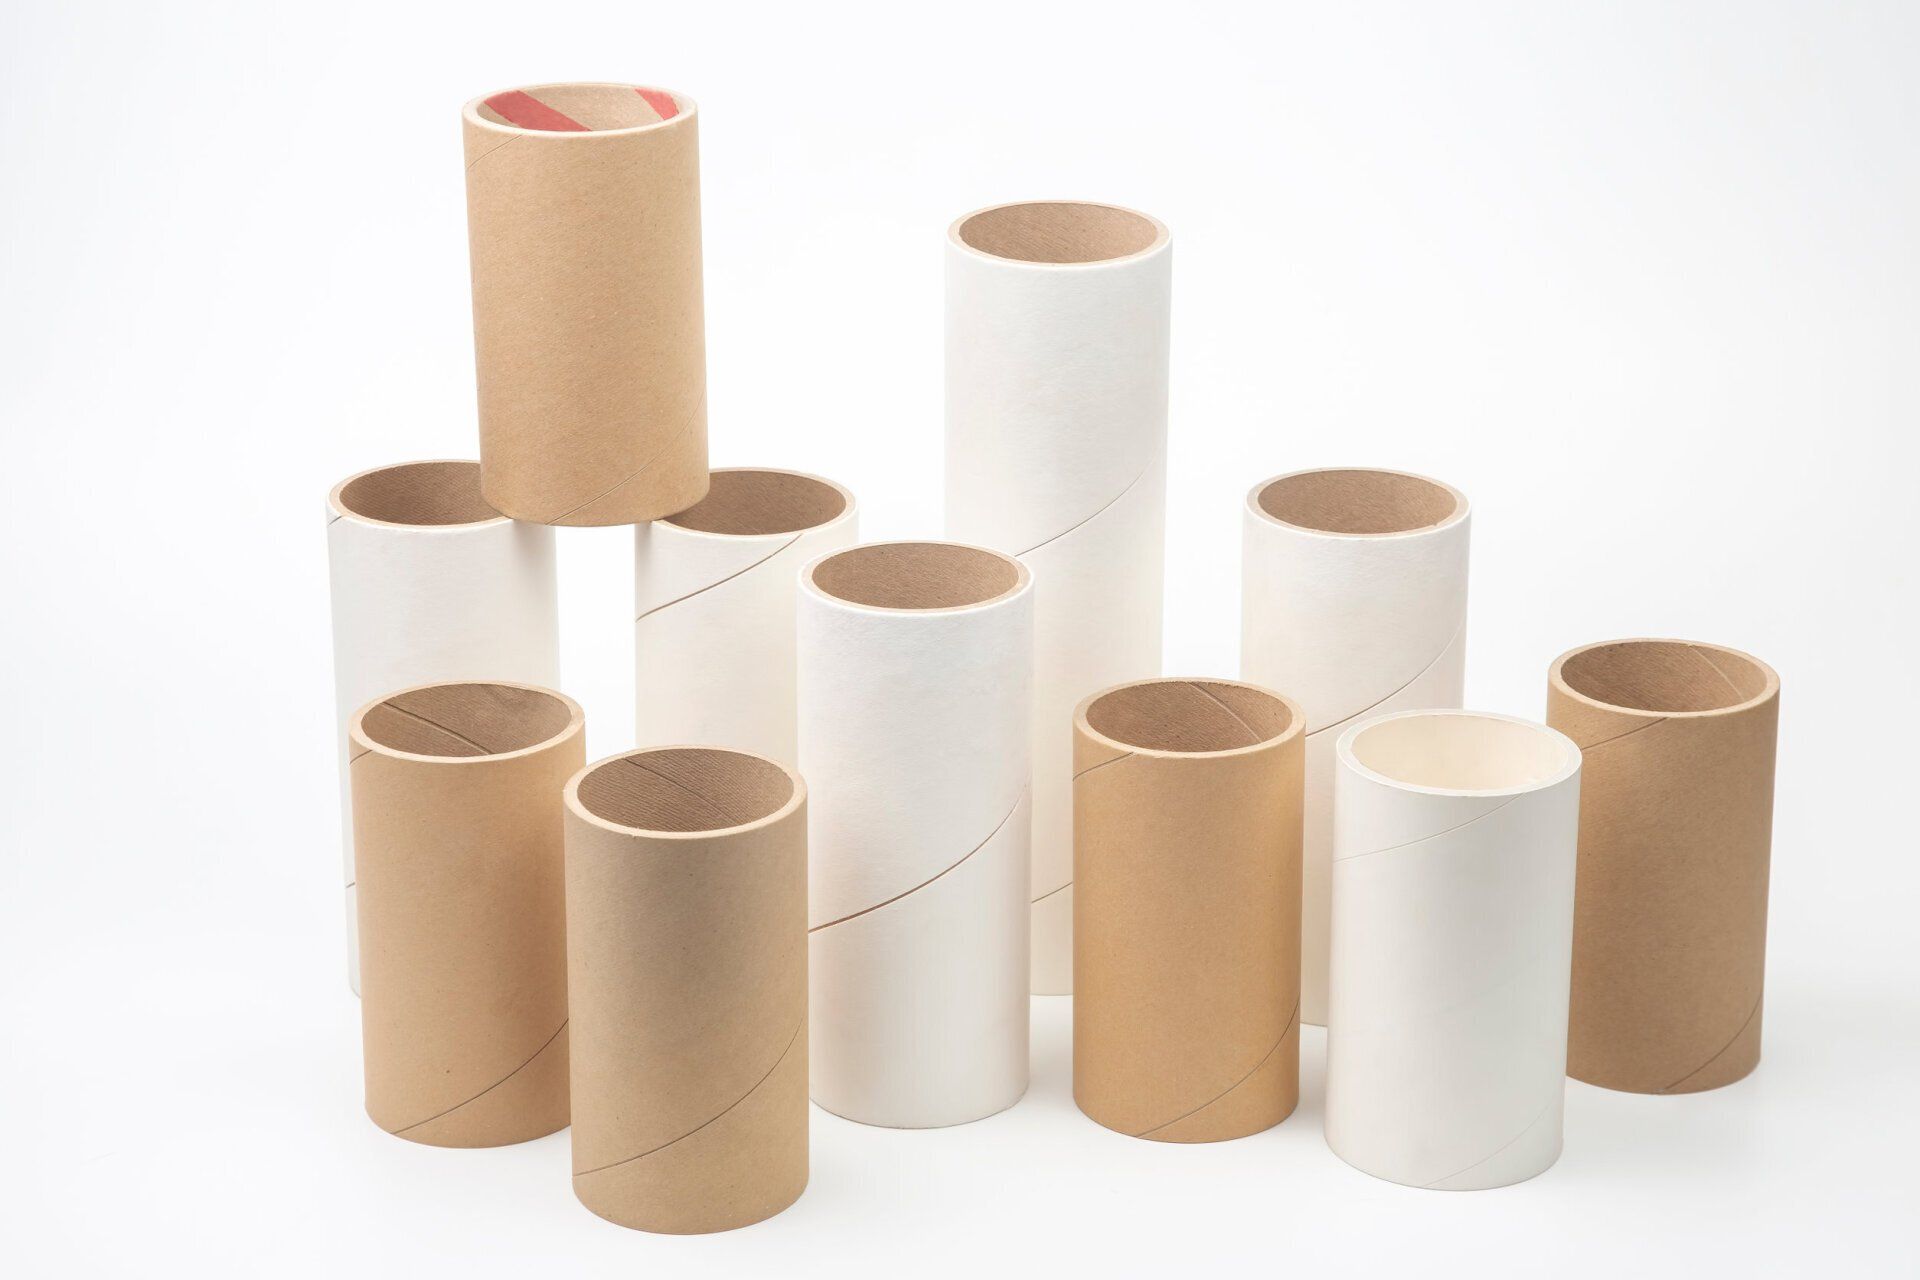 paper tubes